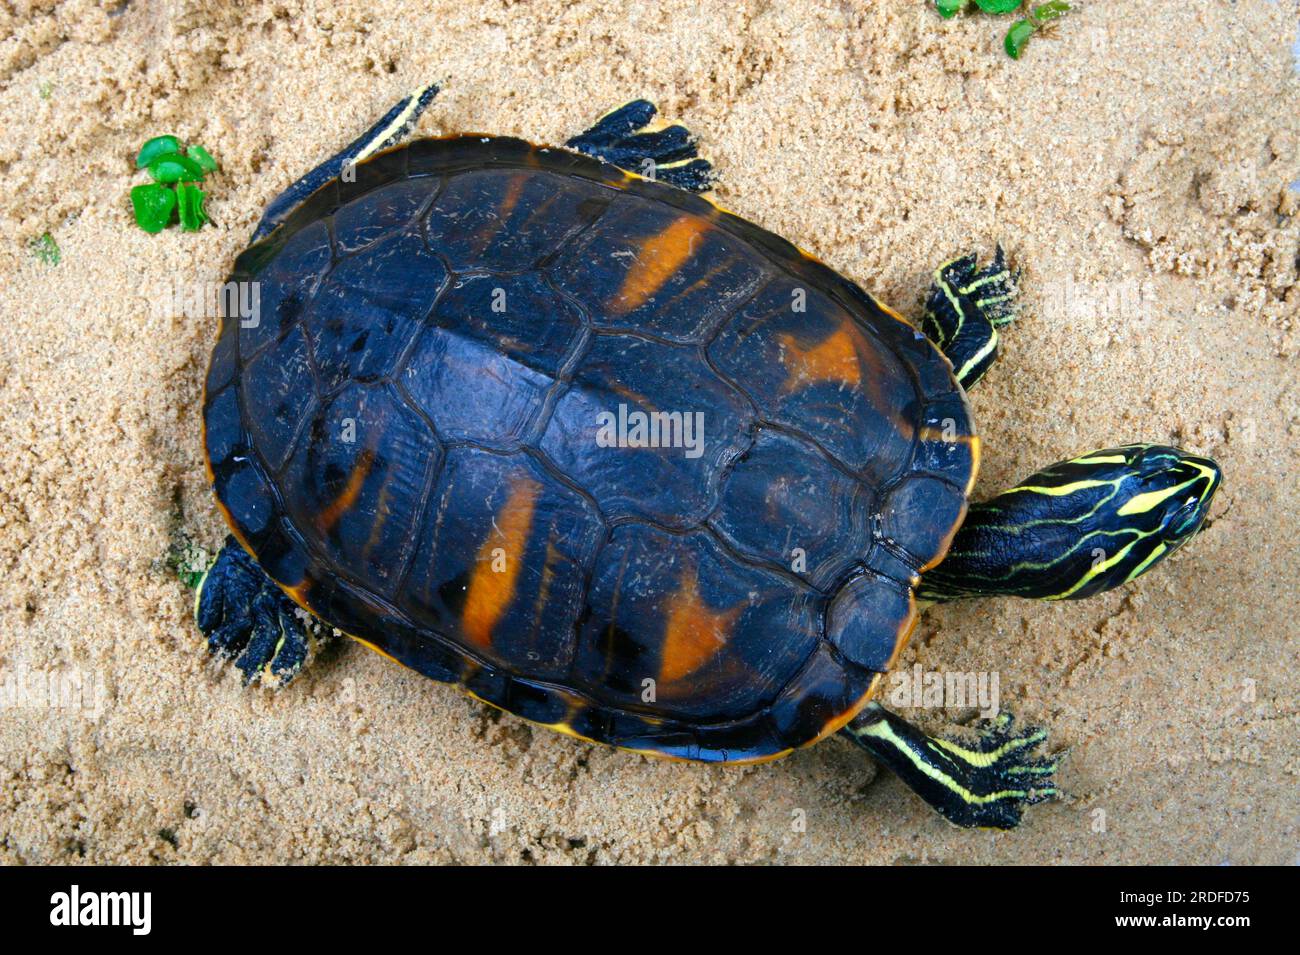 Tartaruga Florida con becco rosso (Chrysemys nelsoni) (Pseudemys rubriventris nelsoni), tartaruga Florida con becco rosso, tartaruga con becco rosso Foto Stock